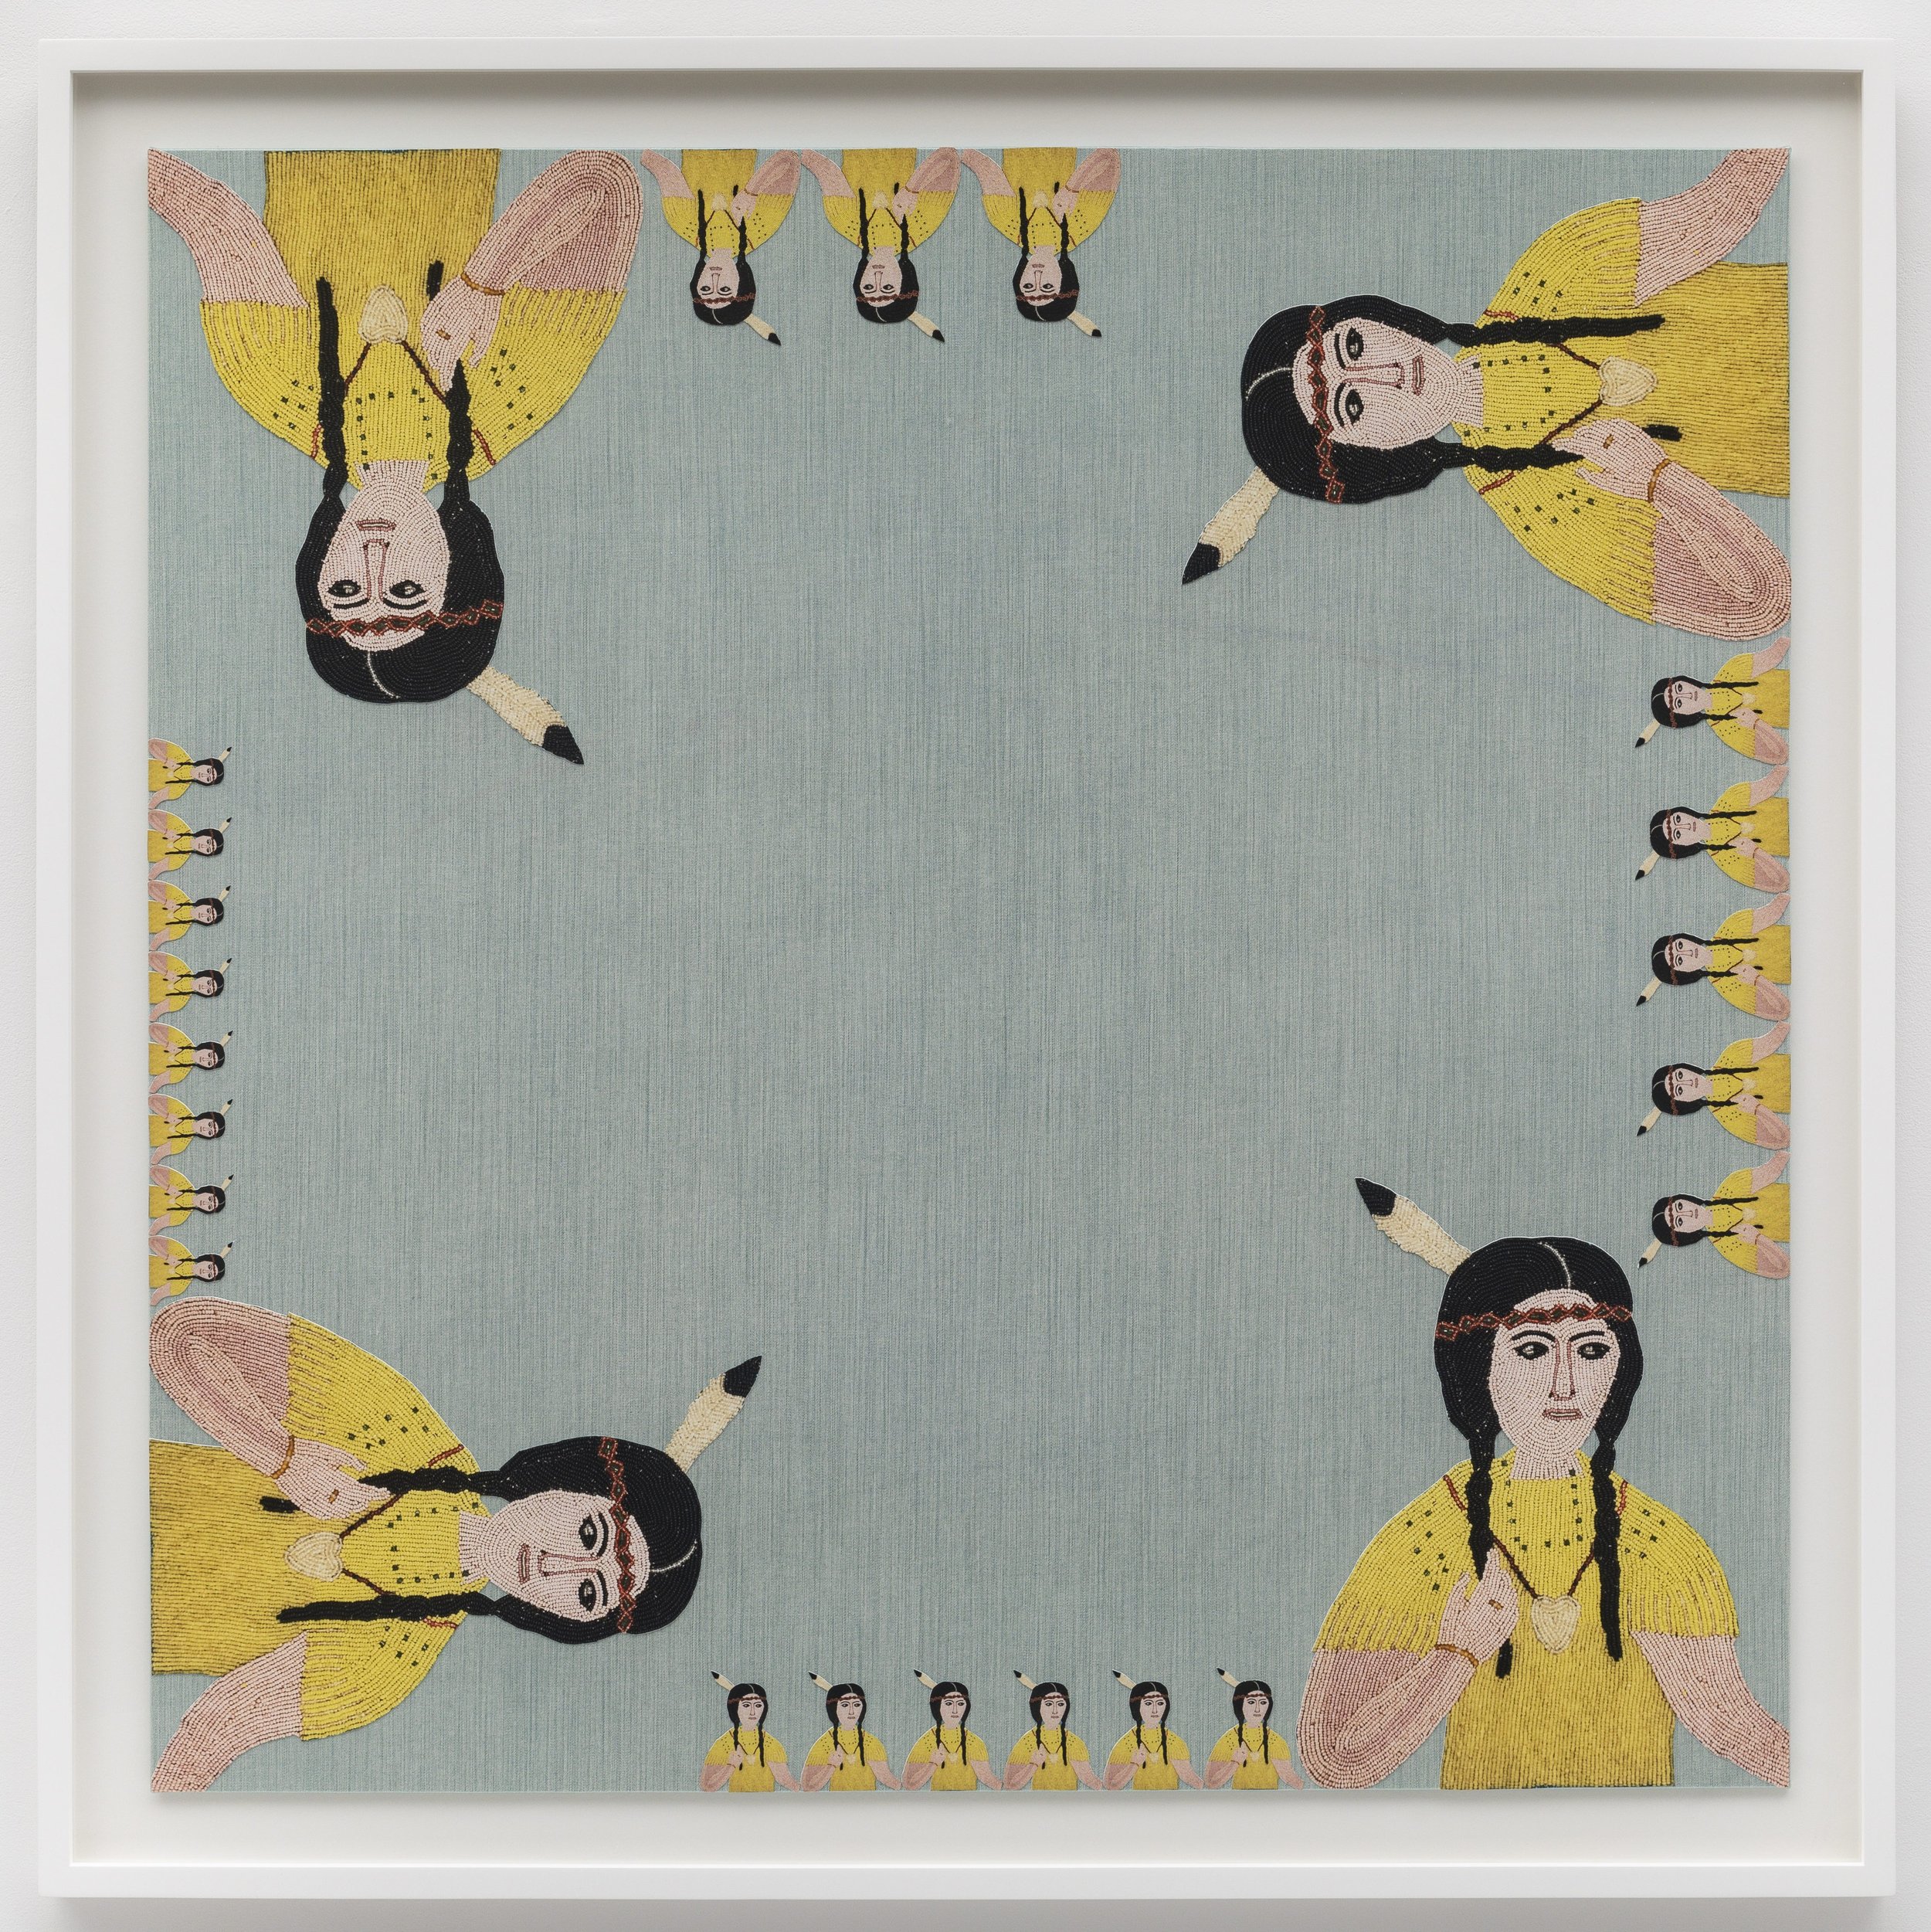   Gossipmonger (akbaleilíichikamnee),  2023, Fabric and archival pigment prints mounted on gatorboard, 44 x 44 in. 